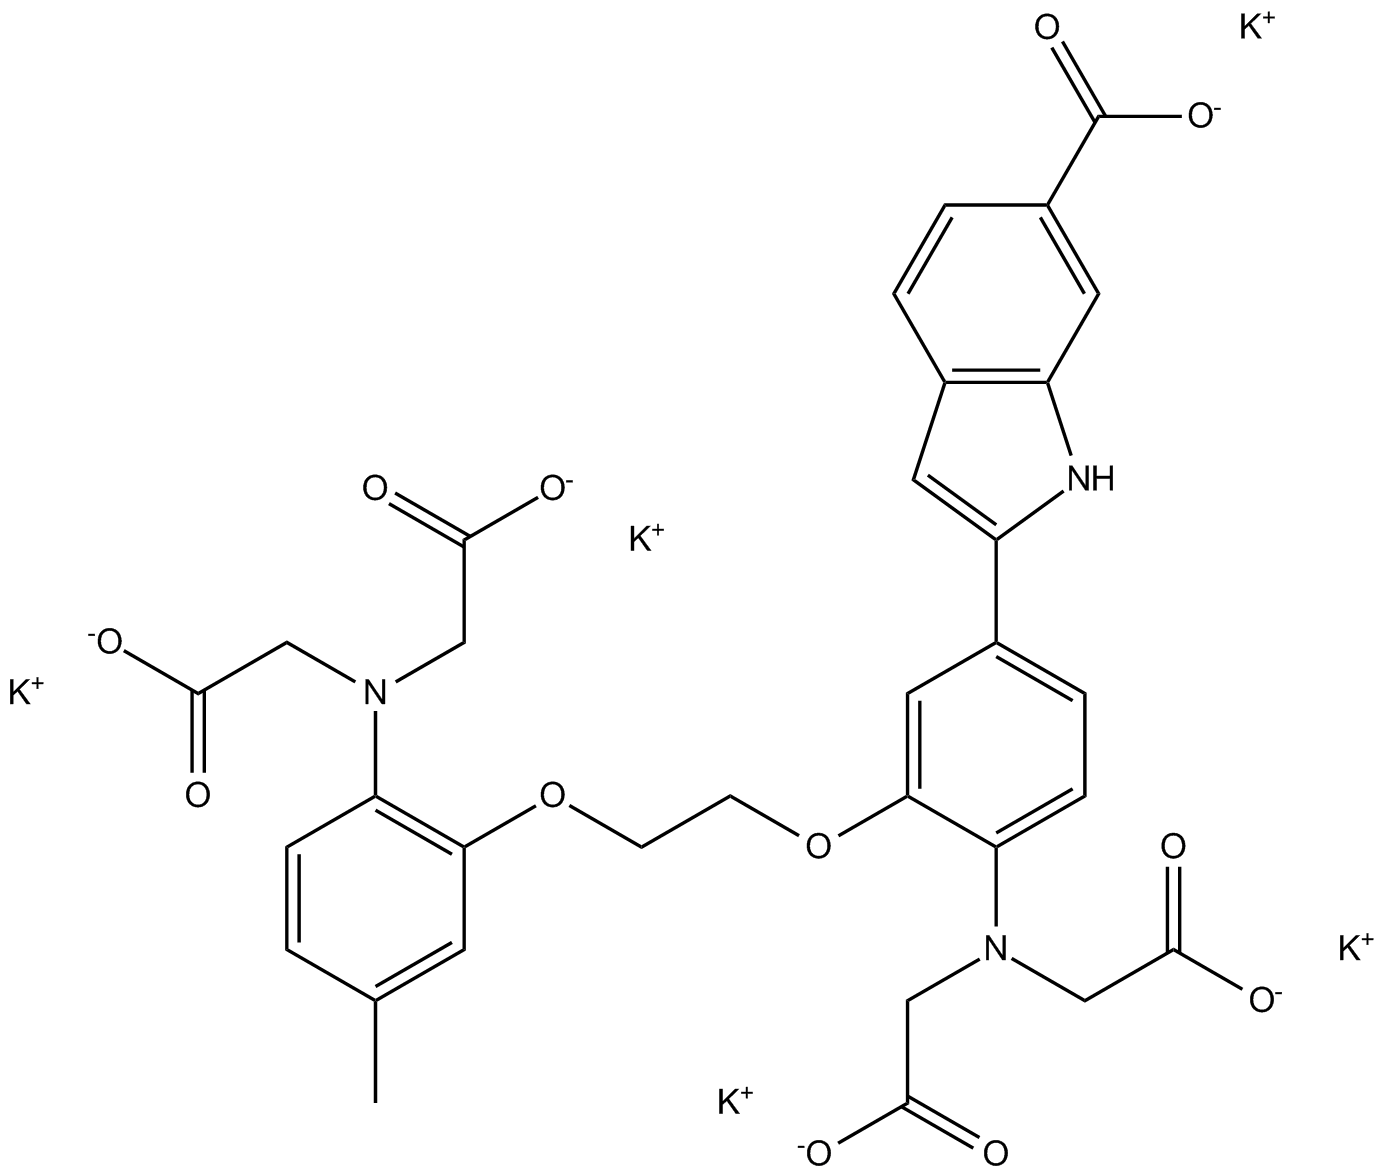 Indo-1 (potassium salt)